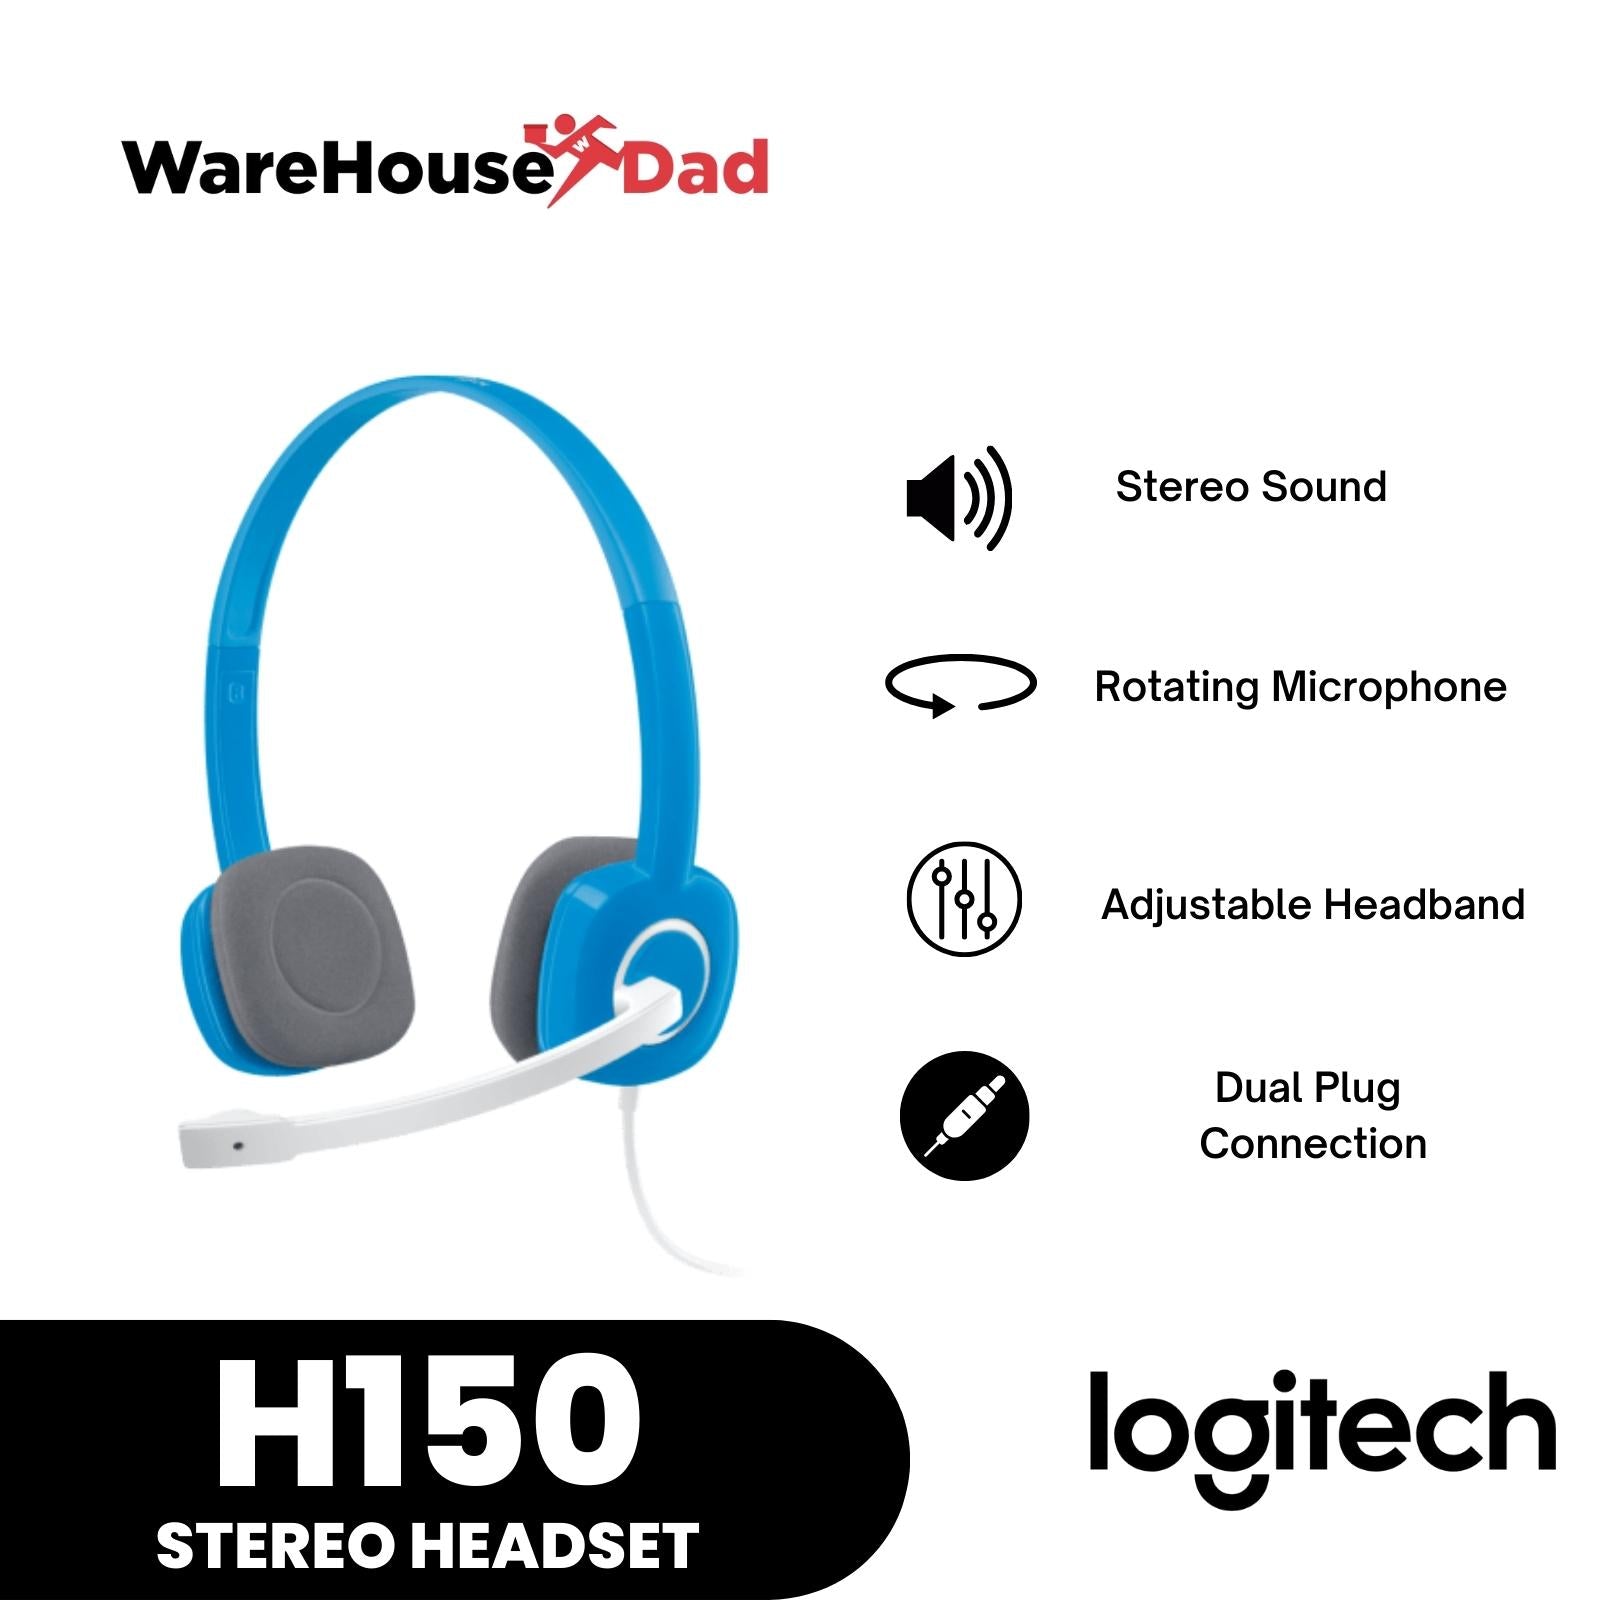 Logitech H150 Stereo Headset WarehouseDad –